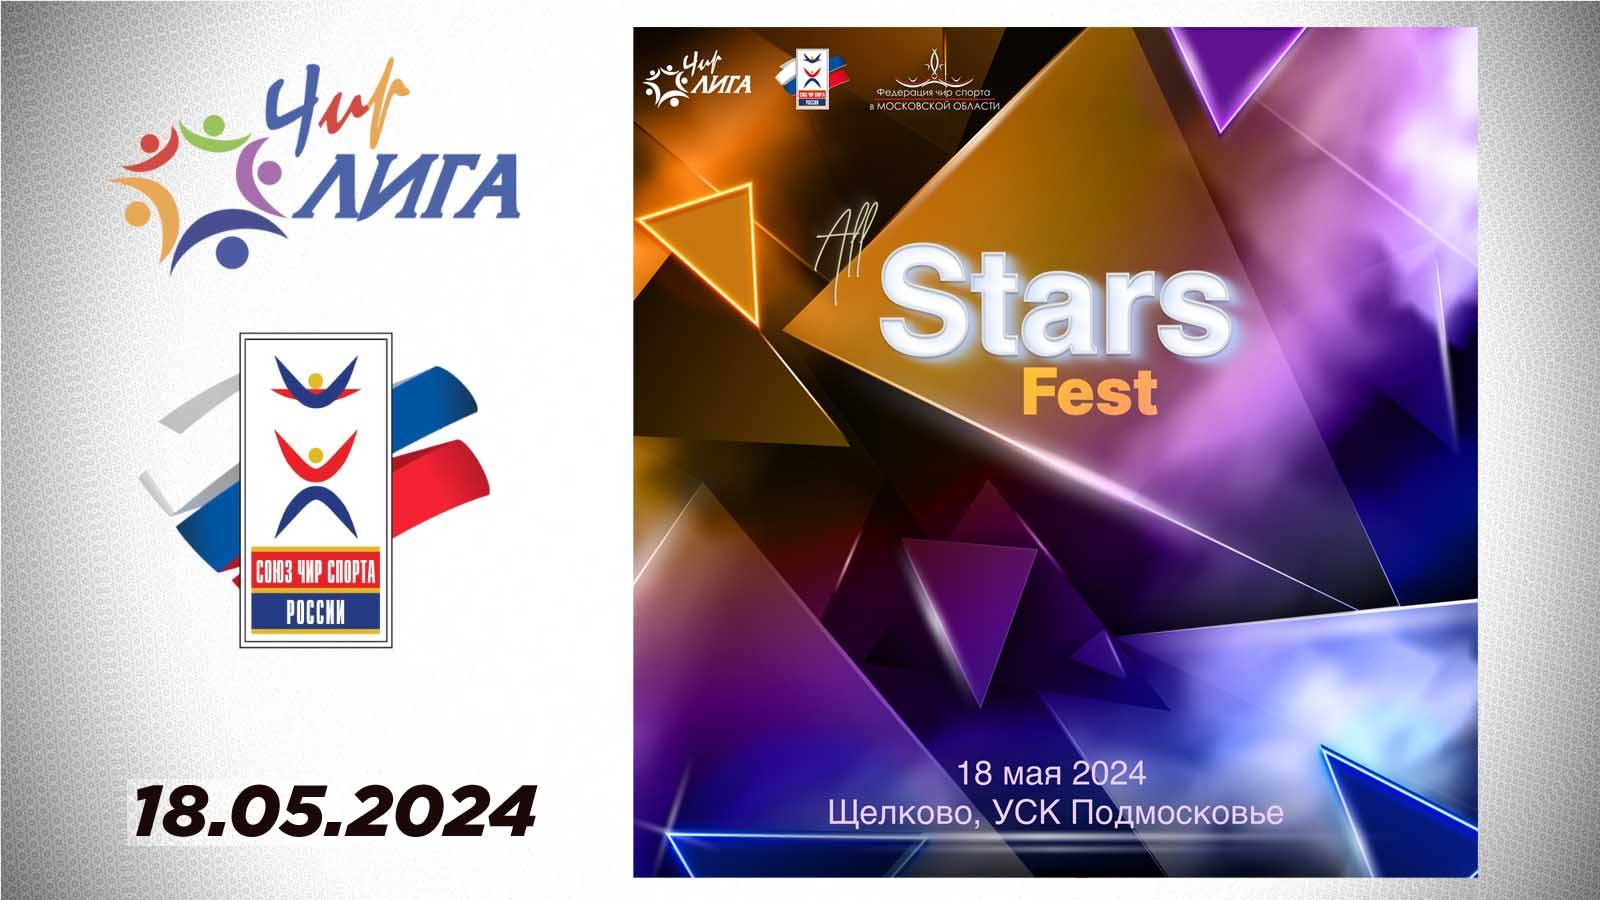 18.05.24 "ALL STARS Fest" Спортивный фестиваль по чир спорту